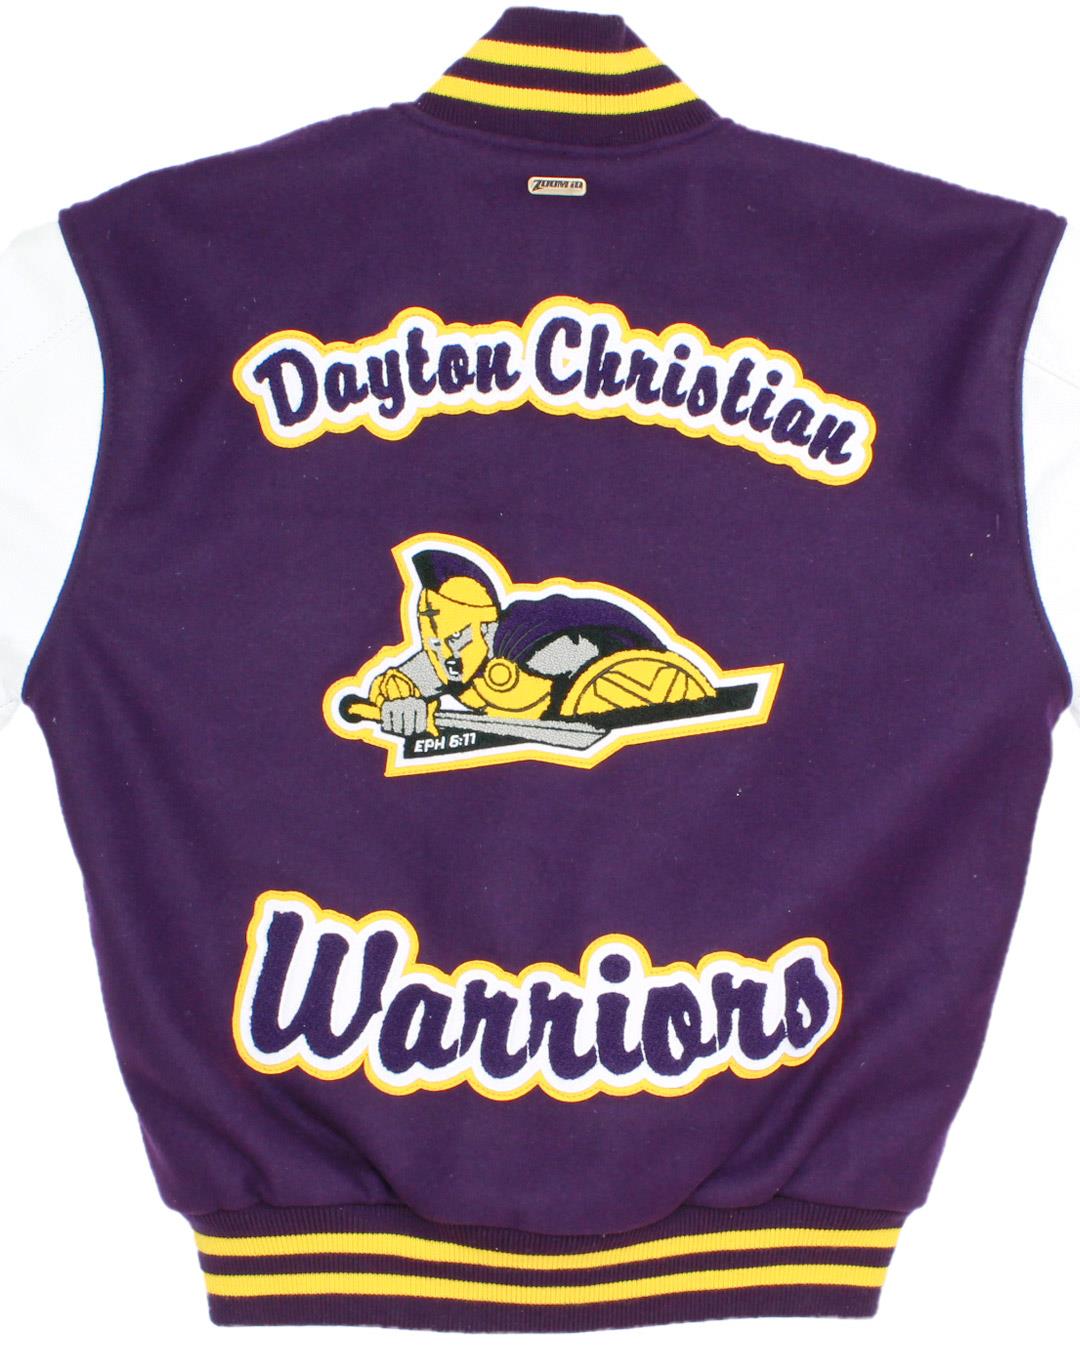 Dayton Christian High School Warriors Letterman Jacket, Miamisburg, OH - Back